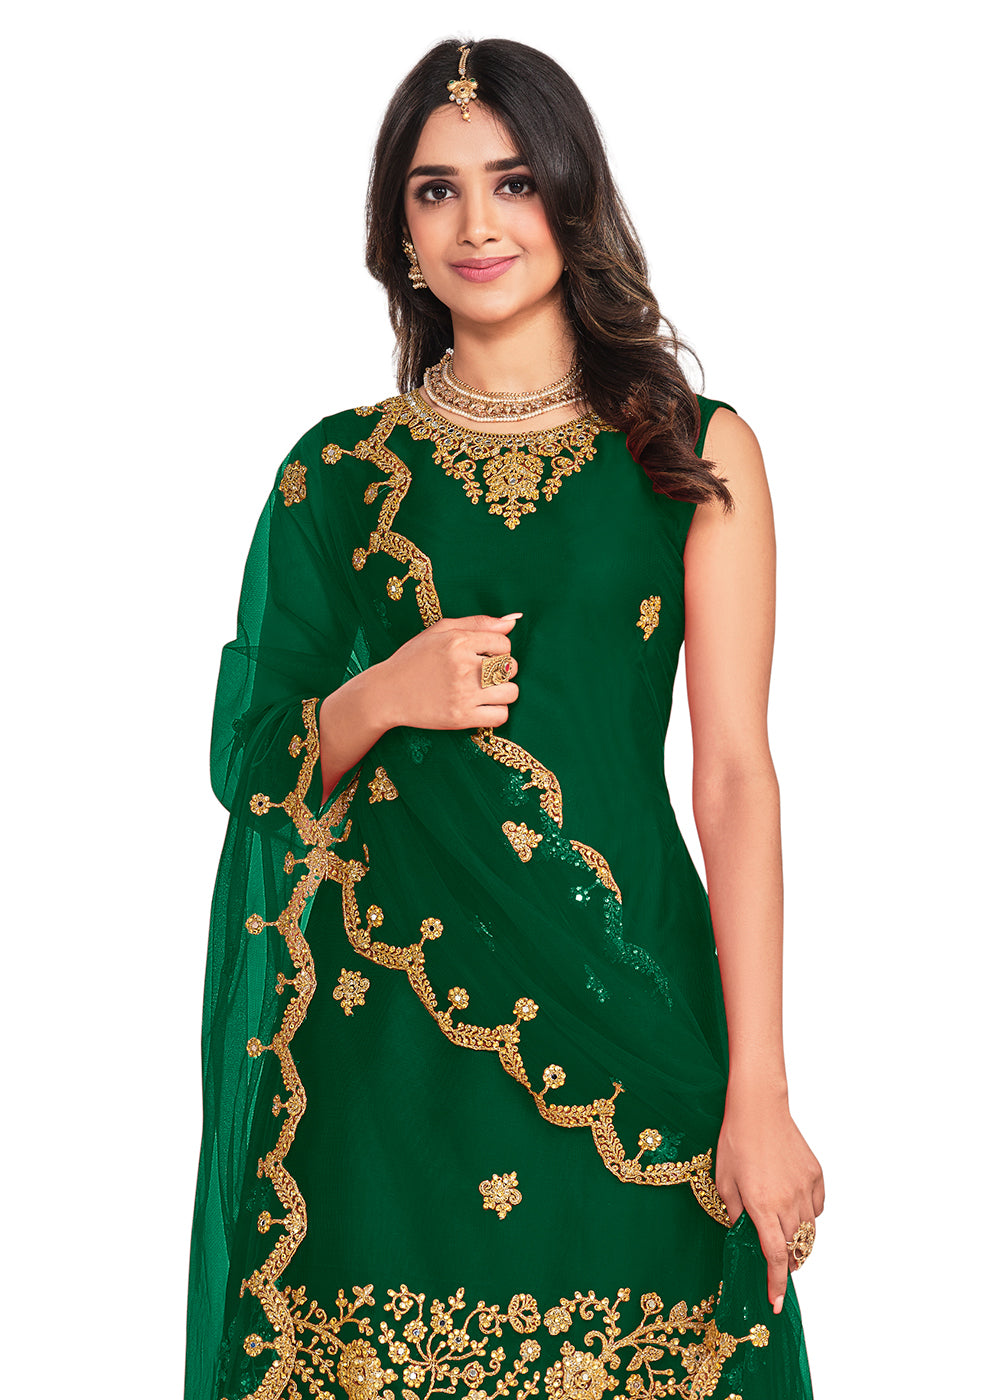 Buy Now Koti Style Elegant Green Patterned Festive Salwar Suit Online in USA, UK, Canada, Germany, Australia & Worldwide at Empress Clothing.